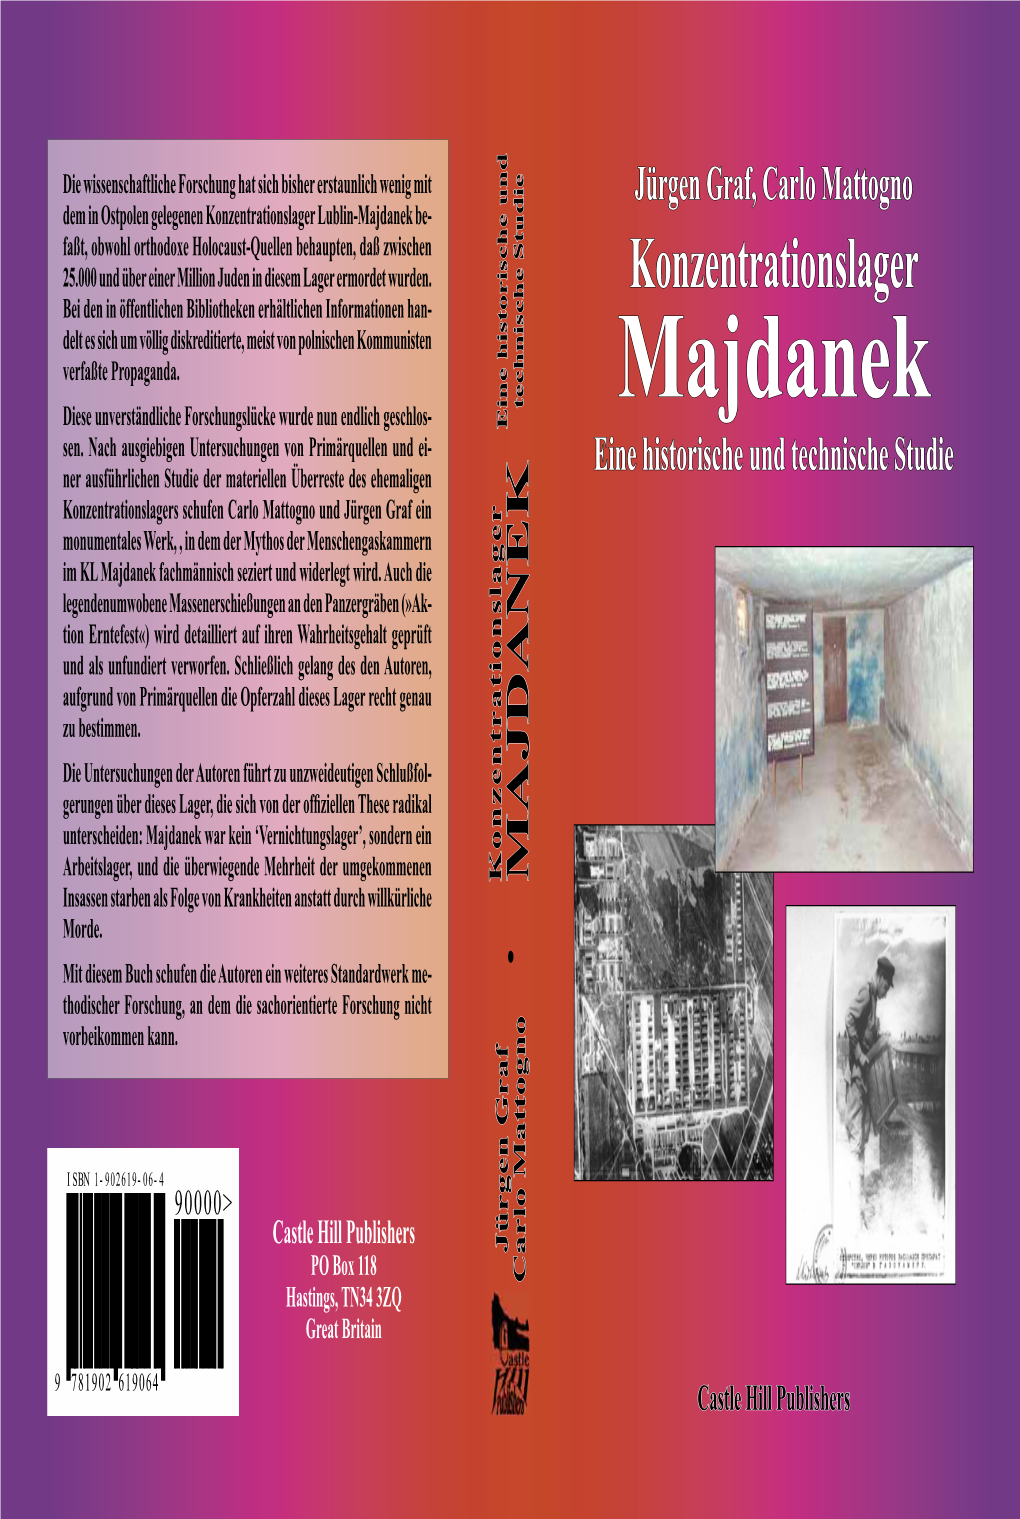 Majdanek Be- E U T H C Faßt, Obwohl Orthodoxe Holocaust-Quellen Behaupten, Daß Zwischen S